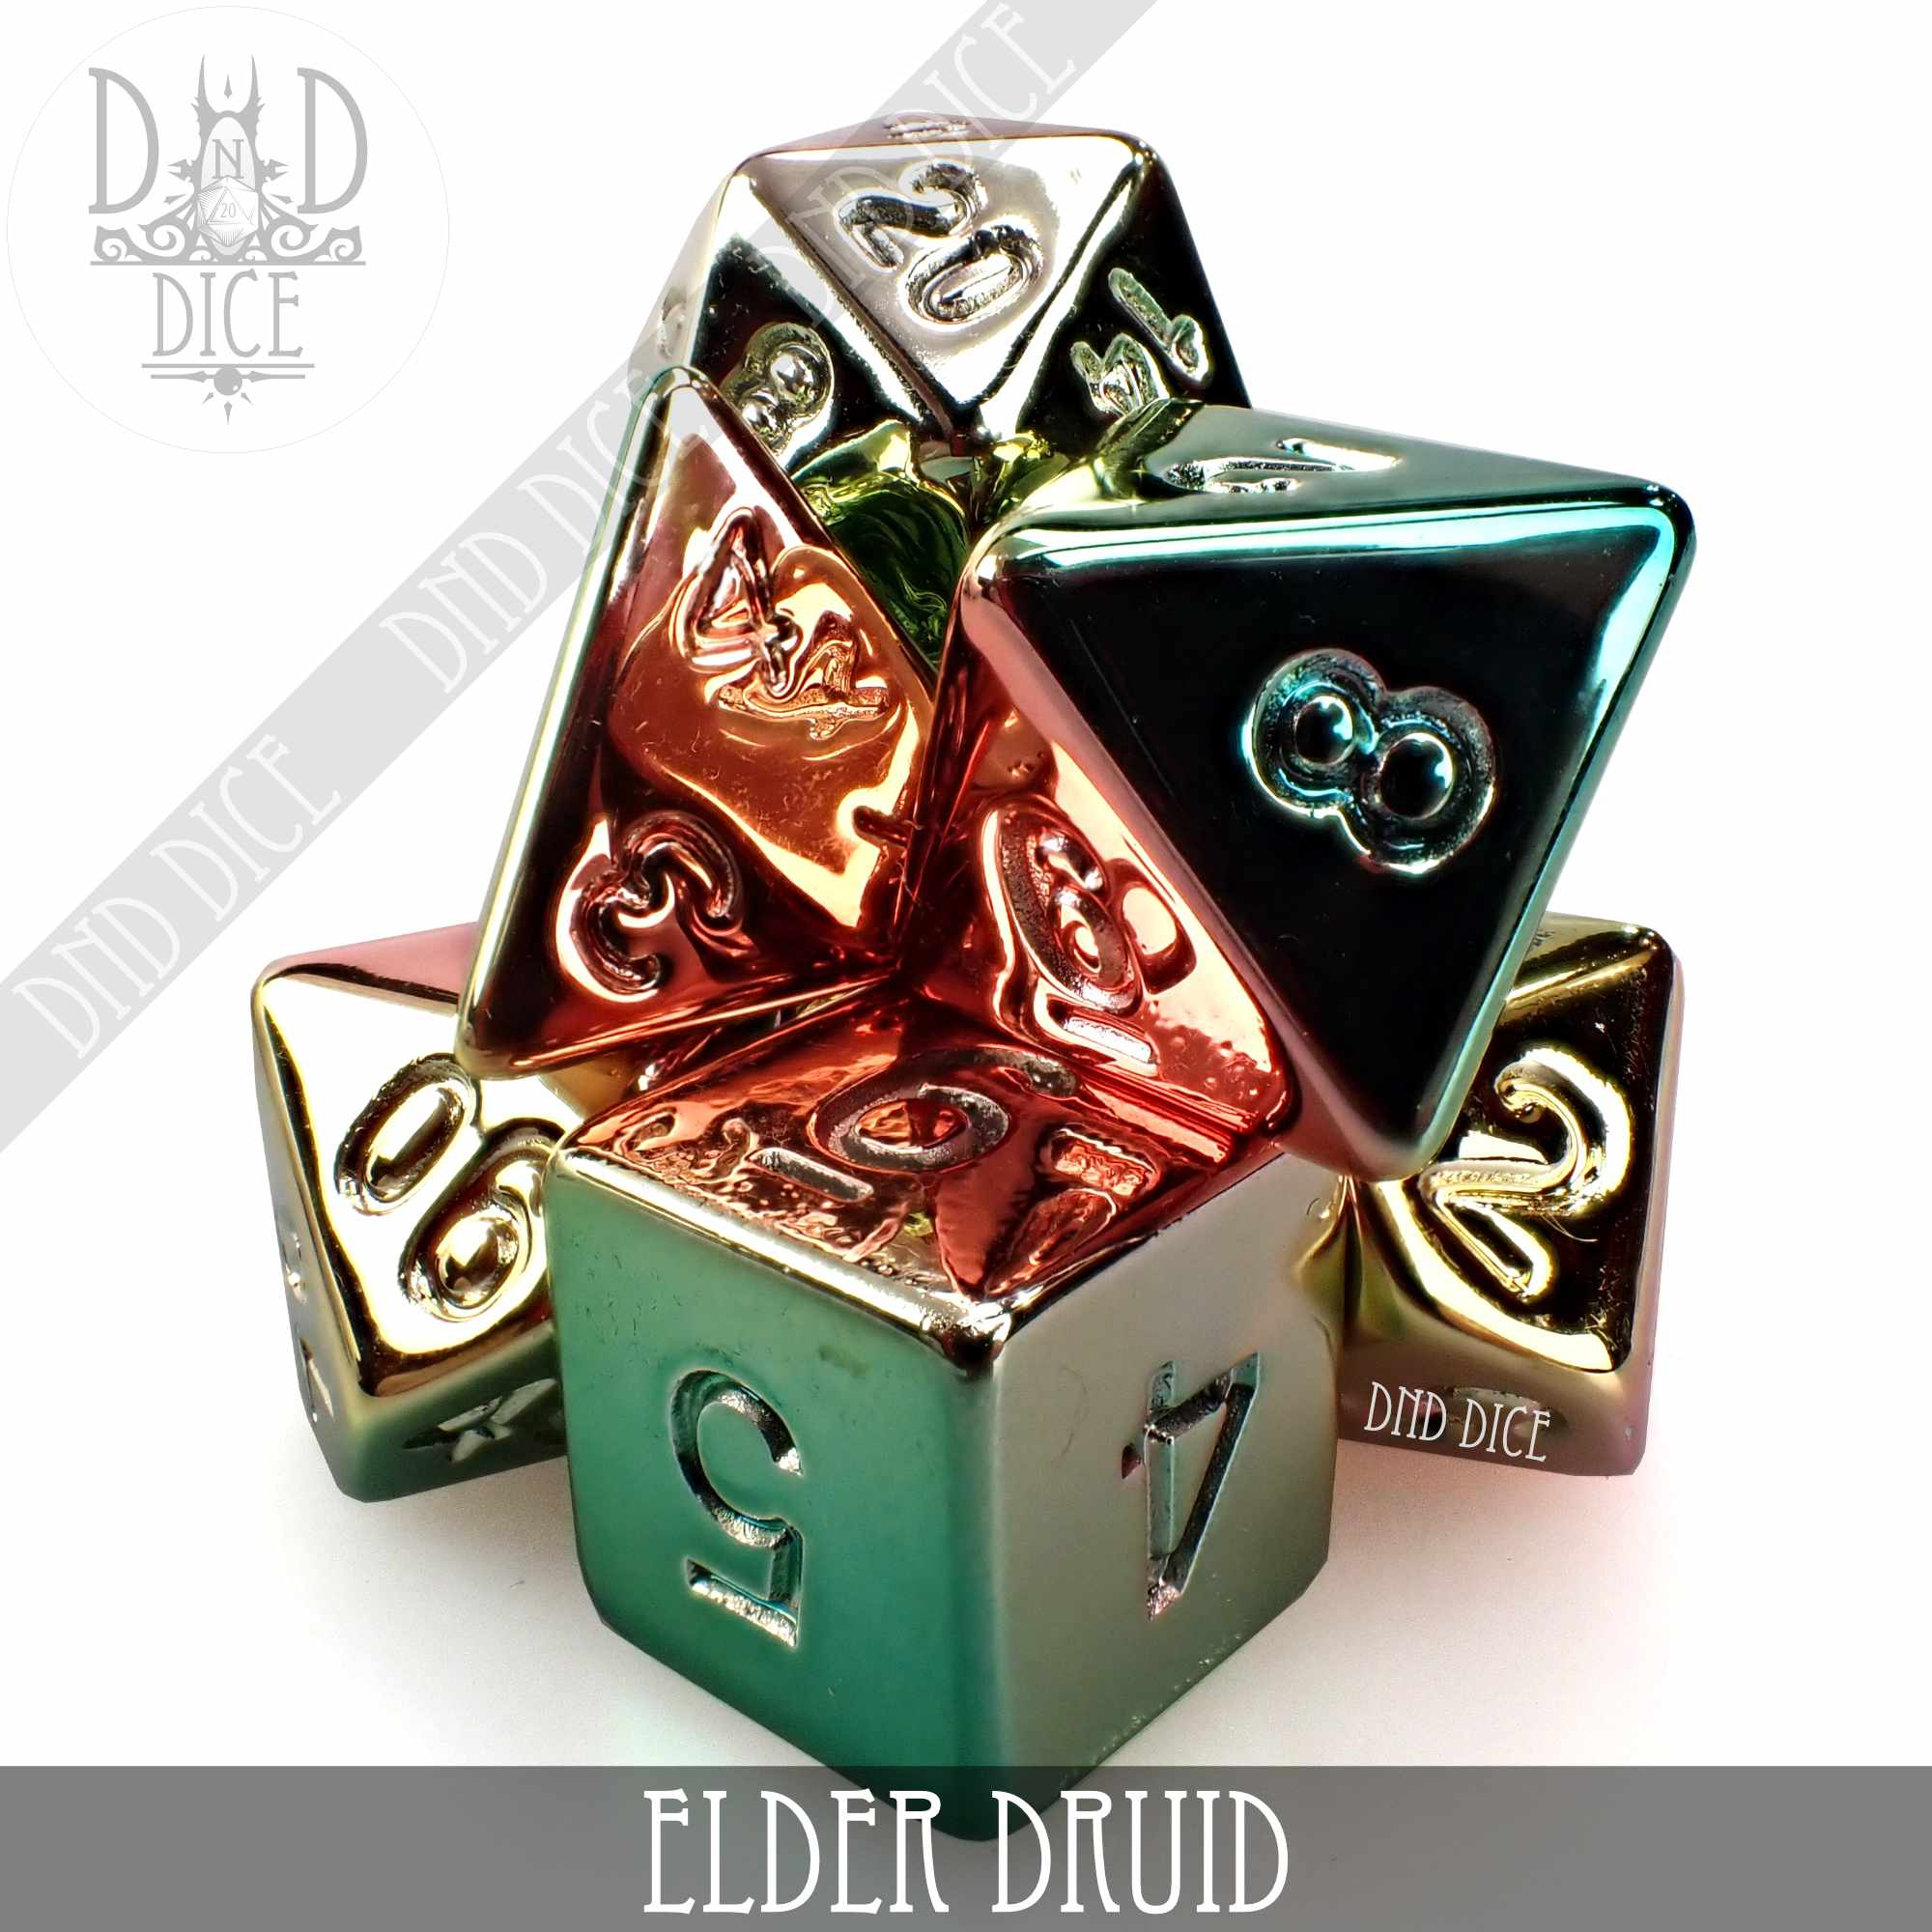 Elder Druid Dice Set